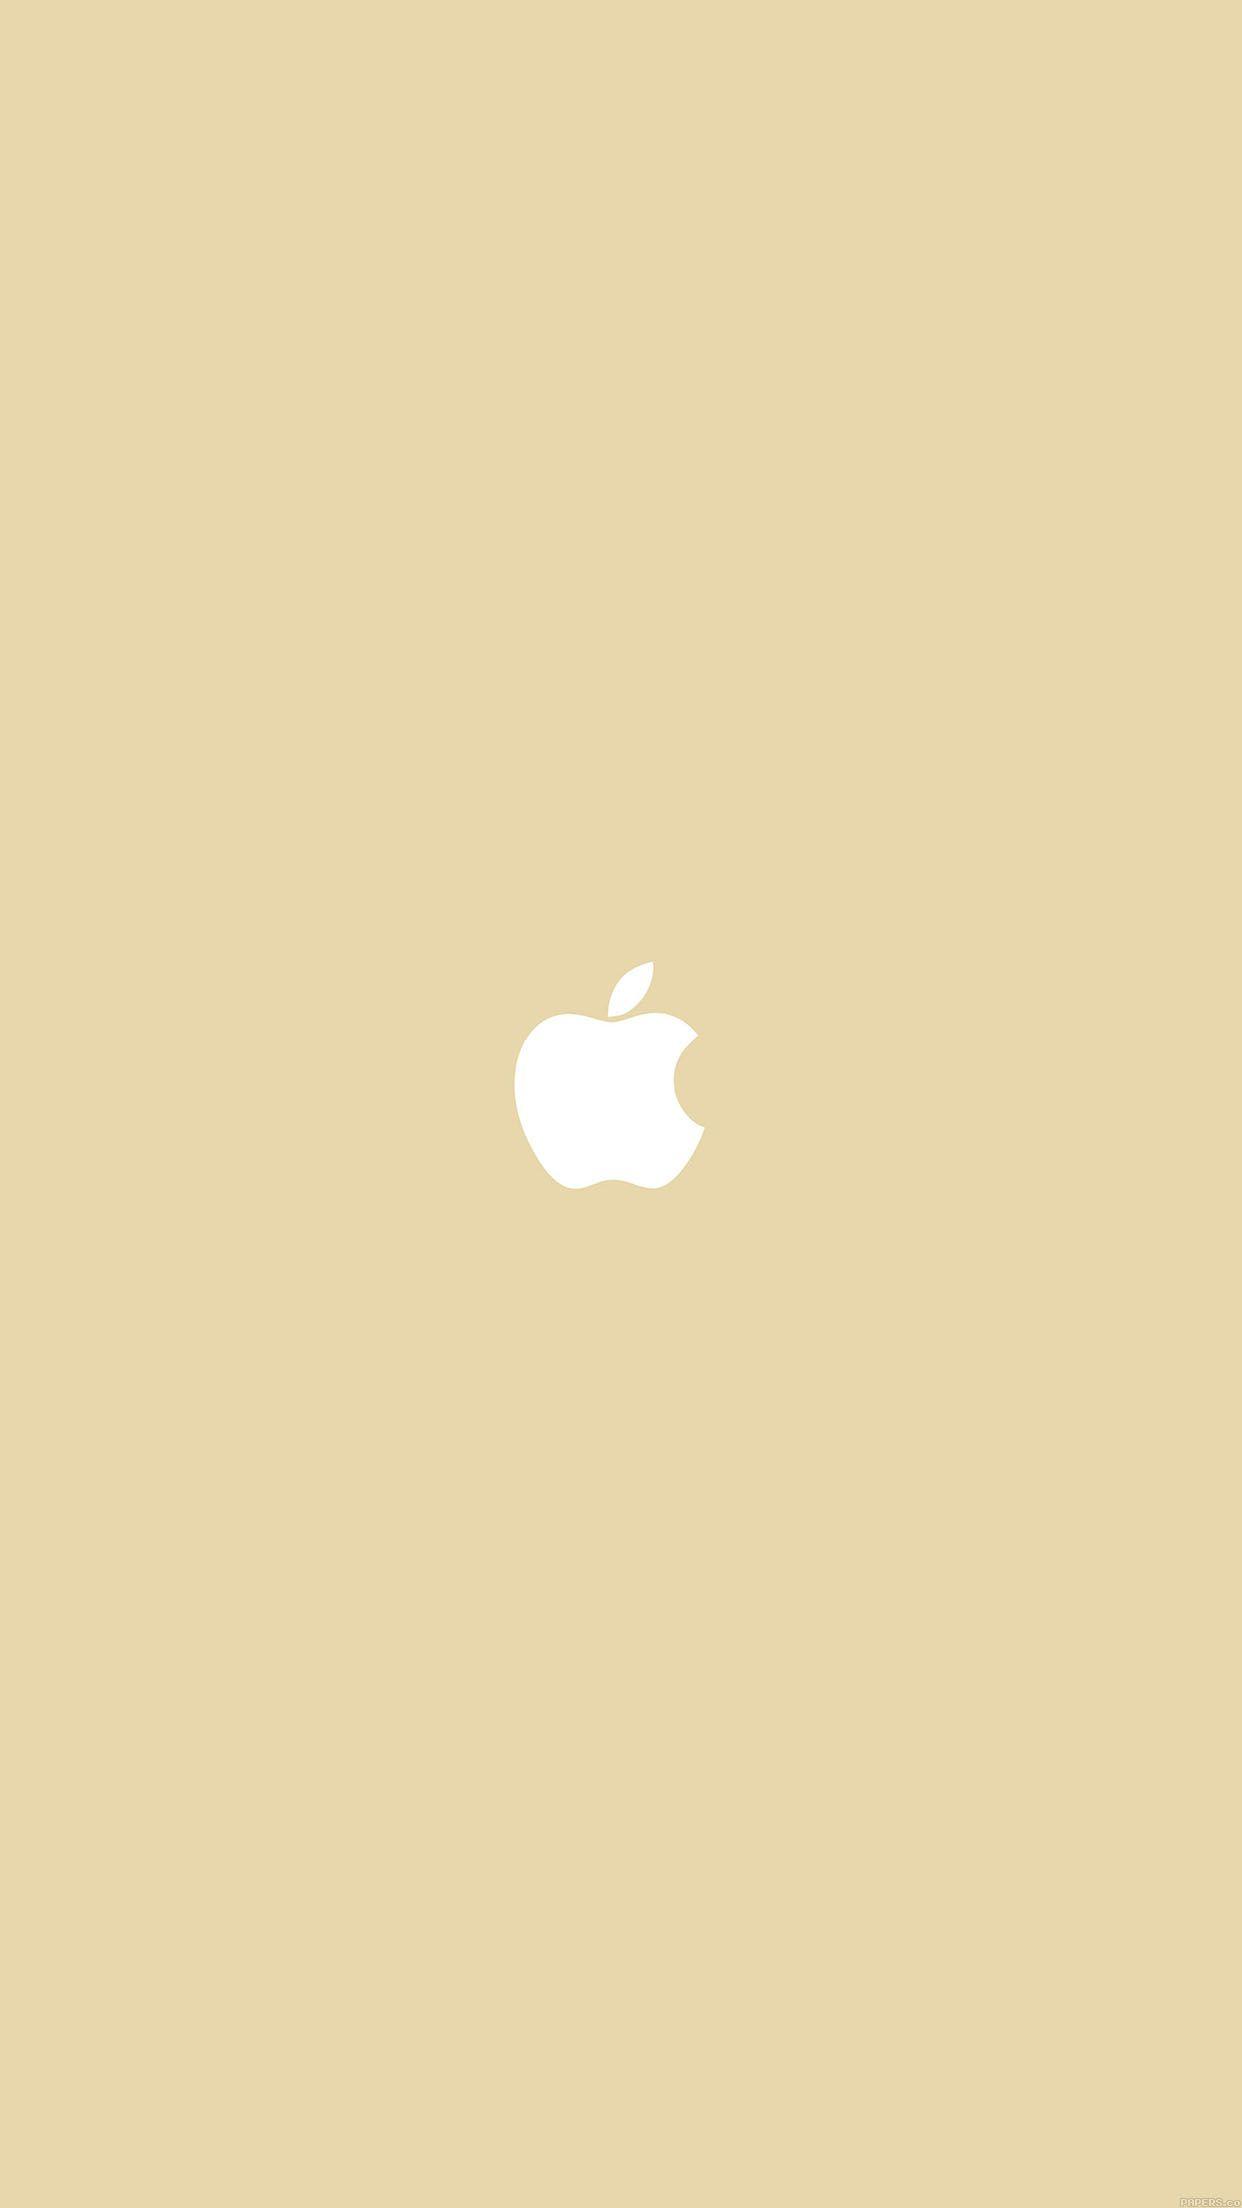 Gold iPhone Logo - iPhone 6 Wallpaper apple logo gold minimal